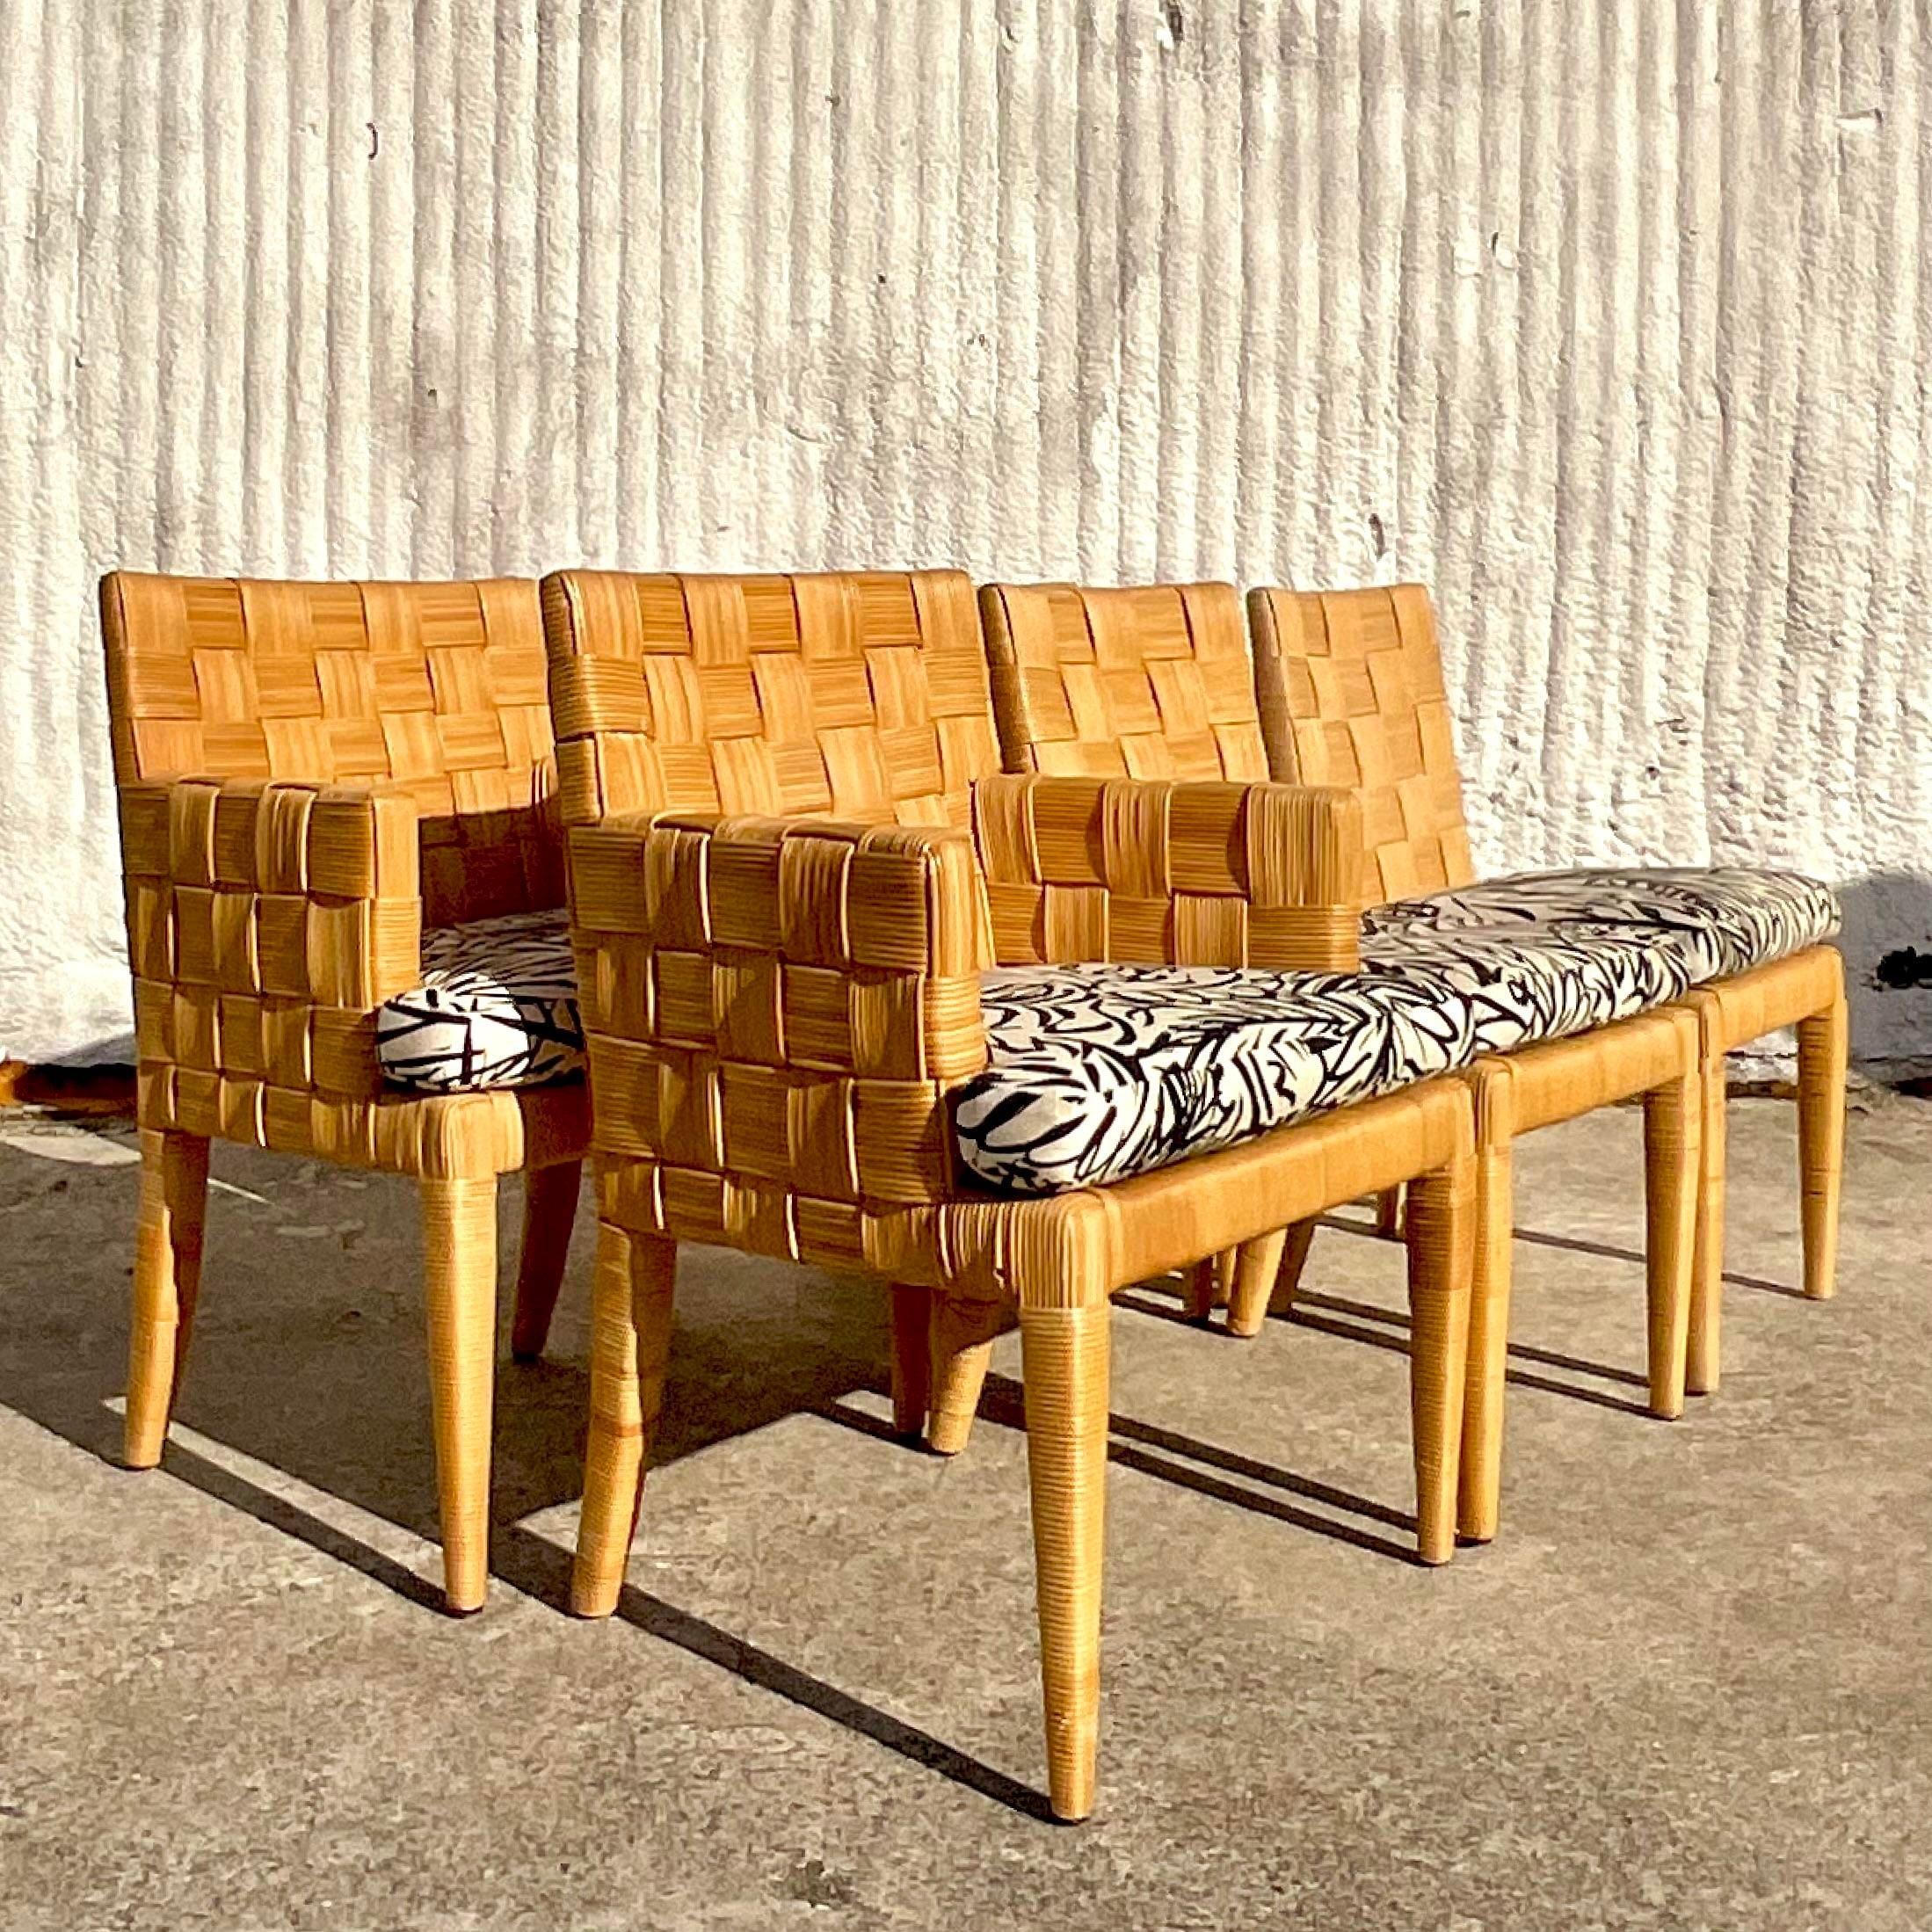 Upholstery Vintage Coastal Donghia “Block Island” Woven Rattan Chairs - Set of 6